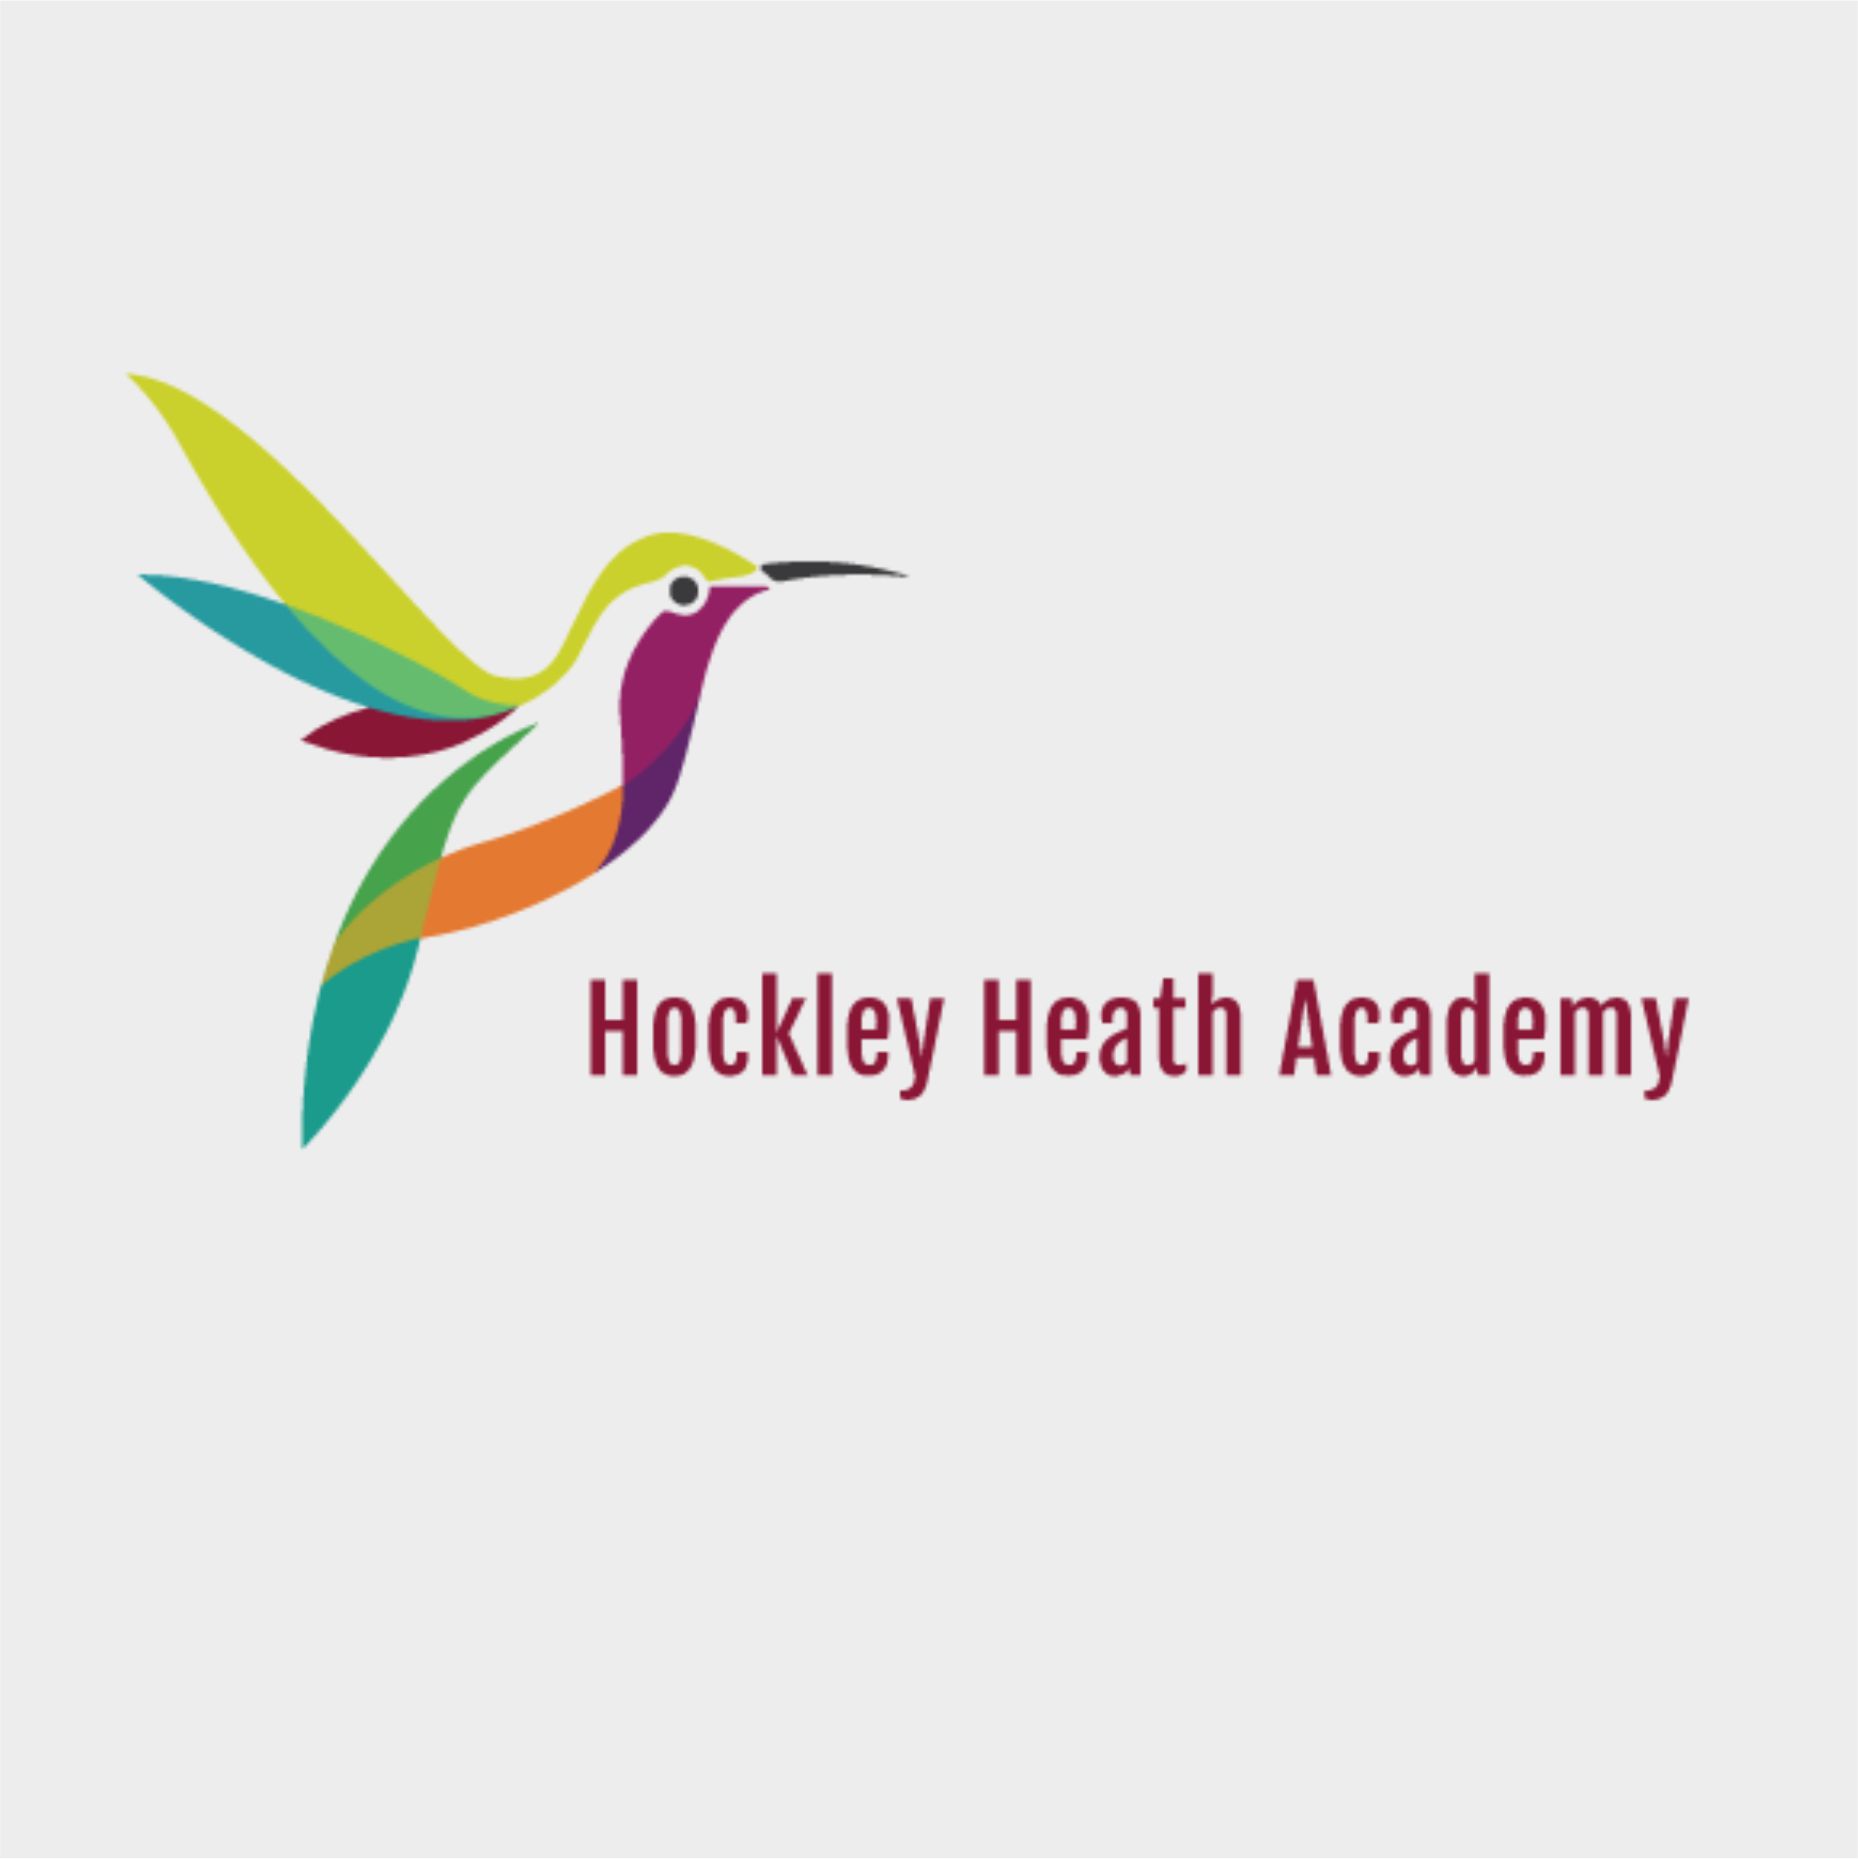 Hockley Heath Academy logo.jpg